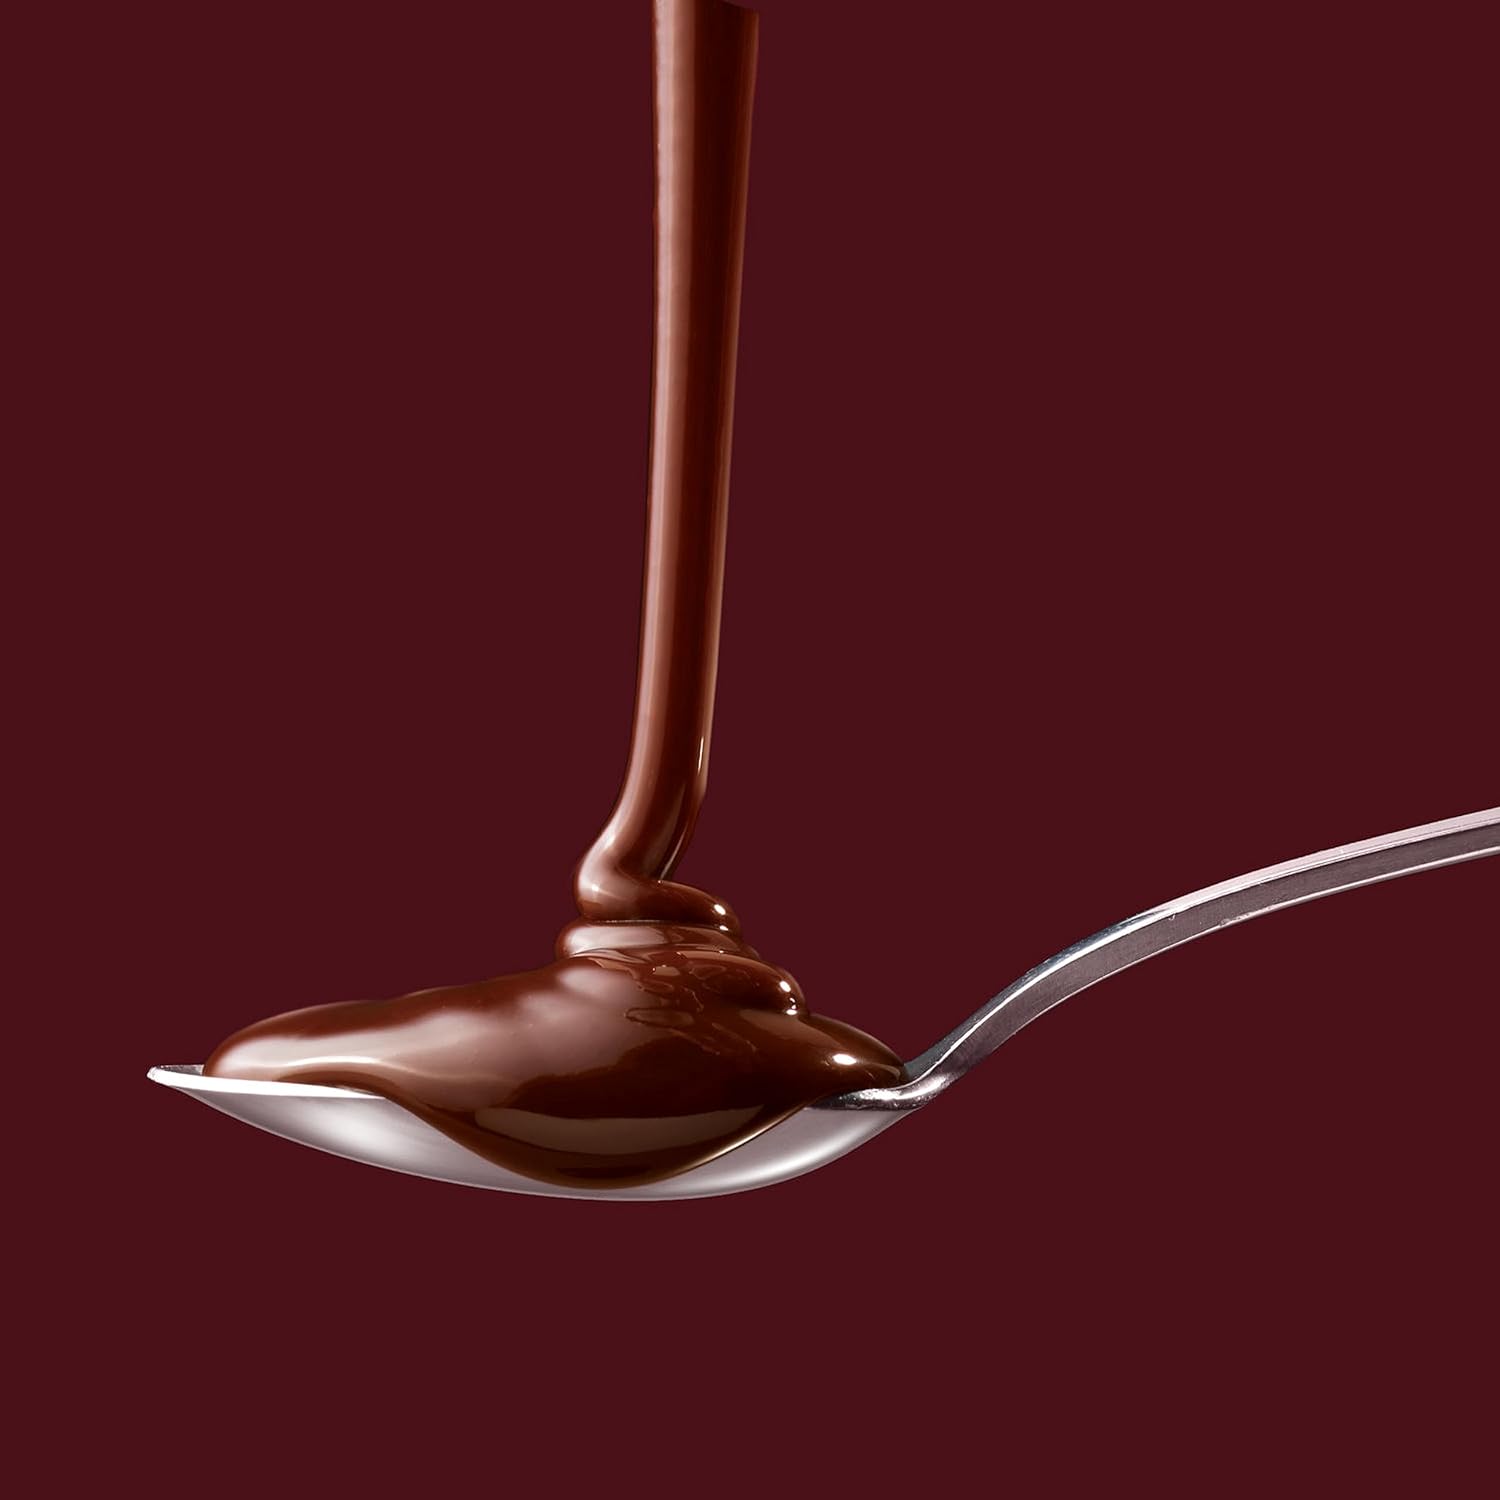 Hershey's Zero Sugar Chocolate Syrup 496g Hershey's Top Nutrition Canada